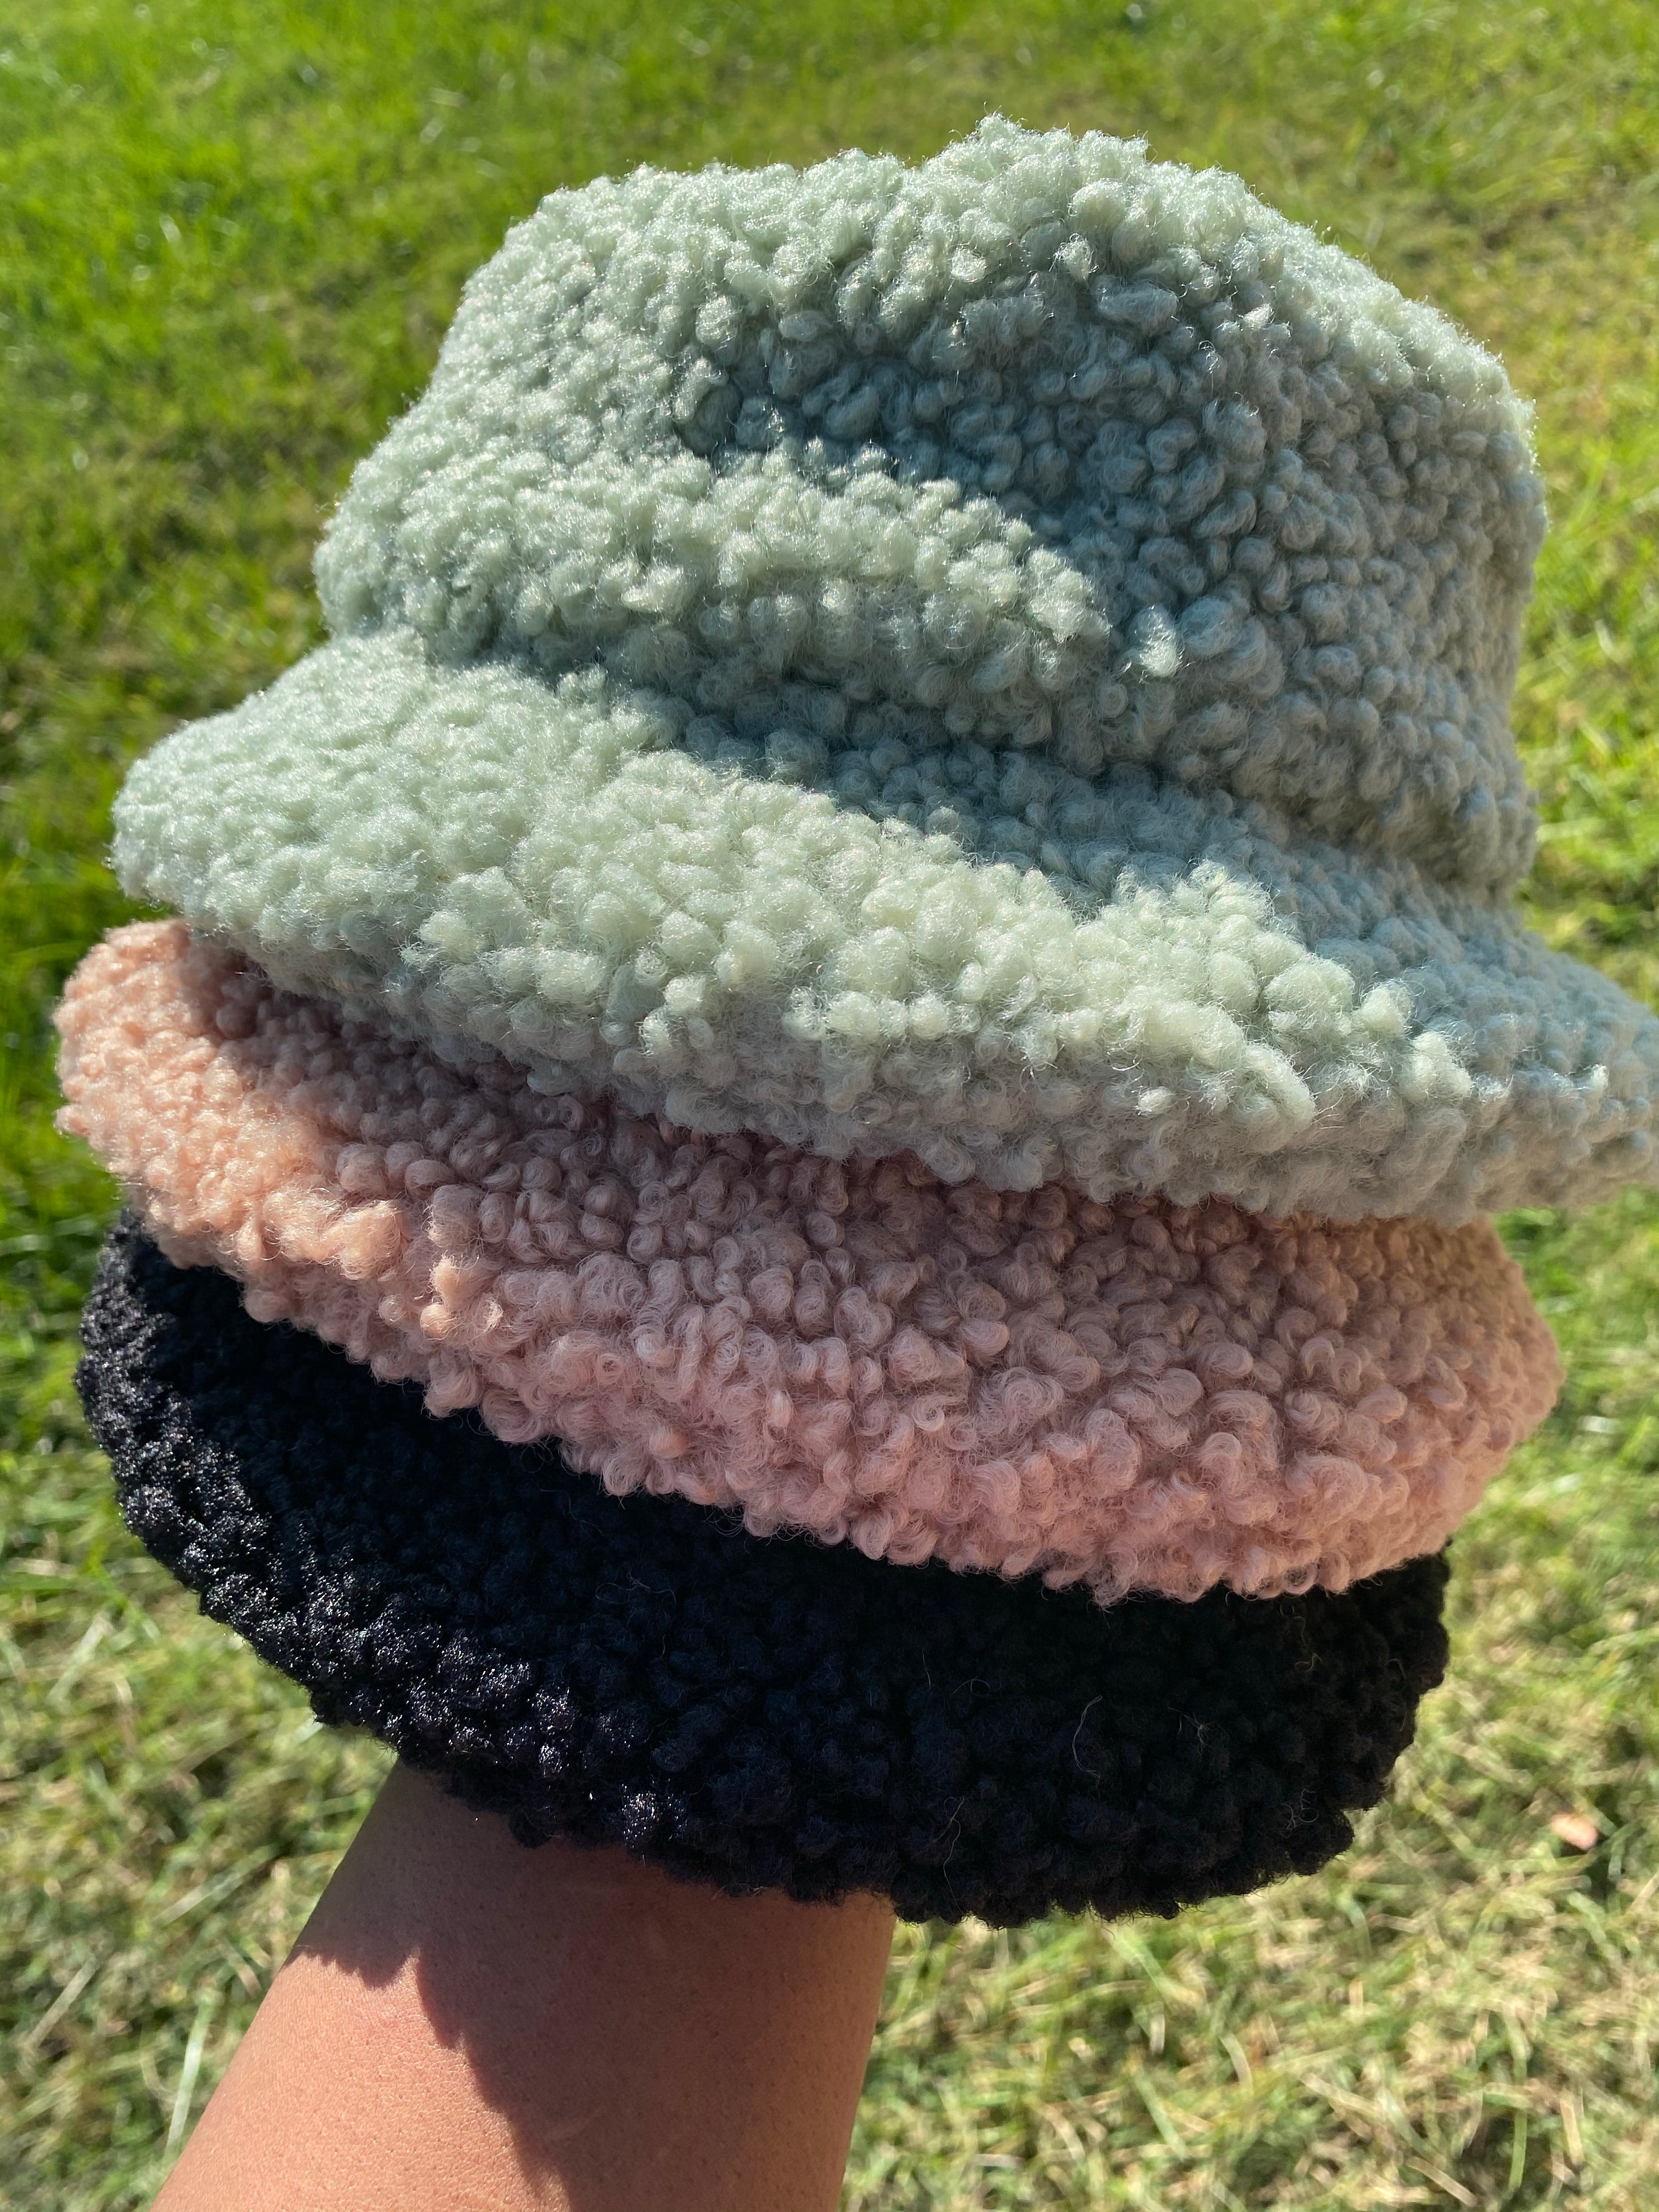 90's R&B Fur Bucket Hat